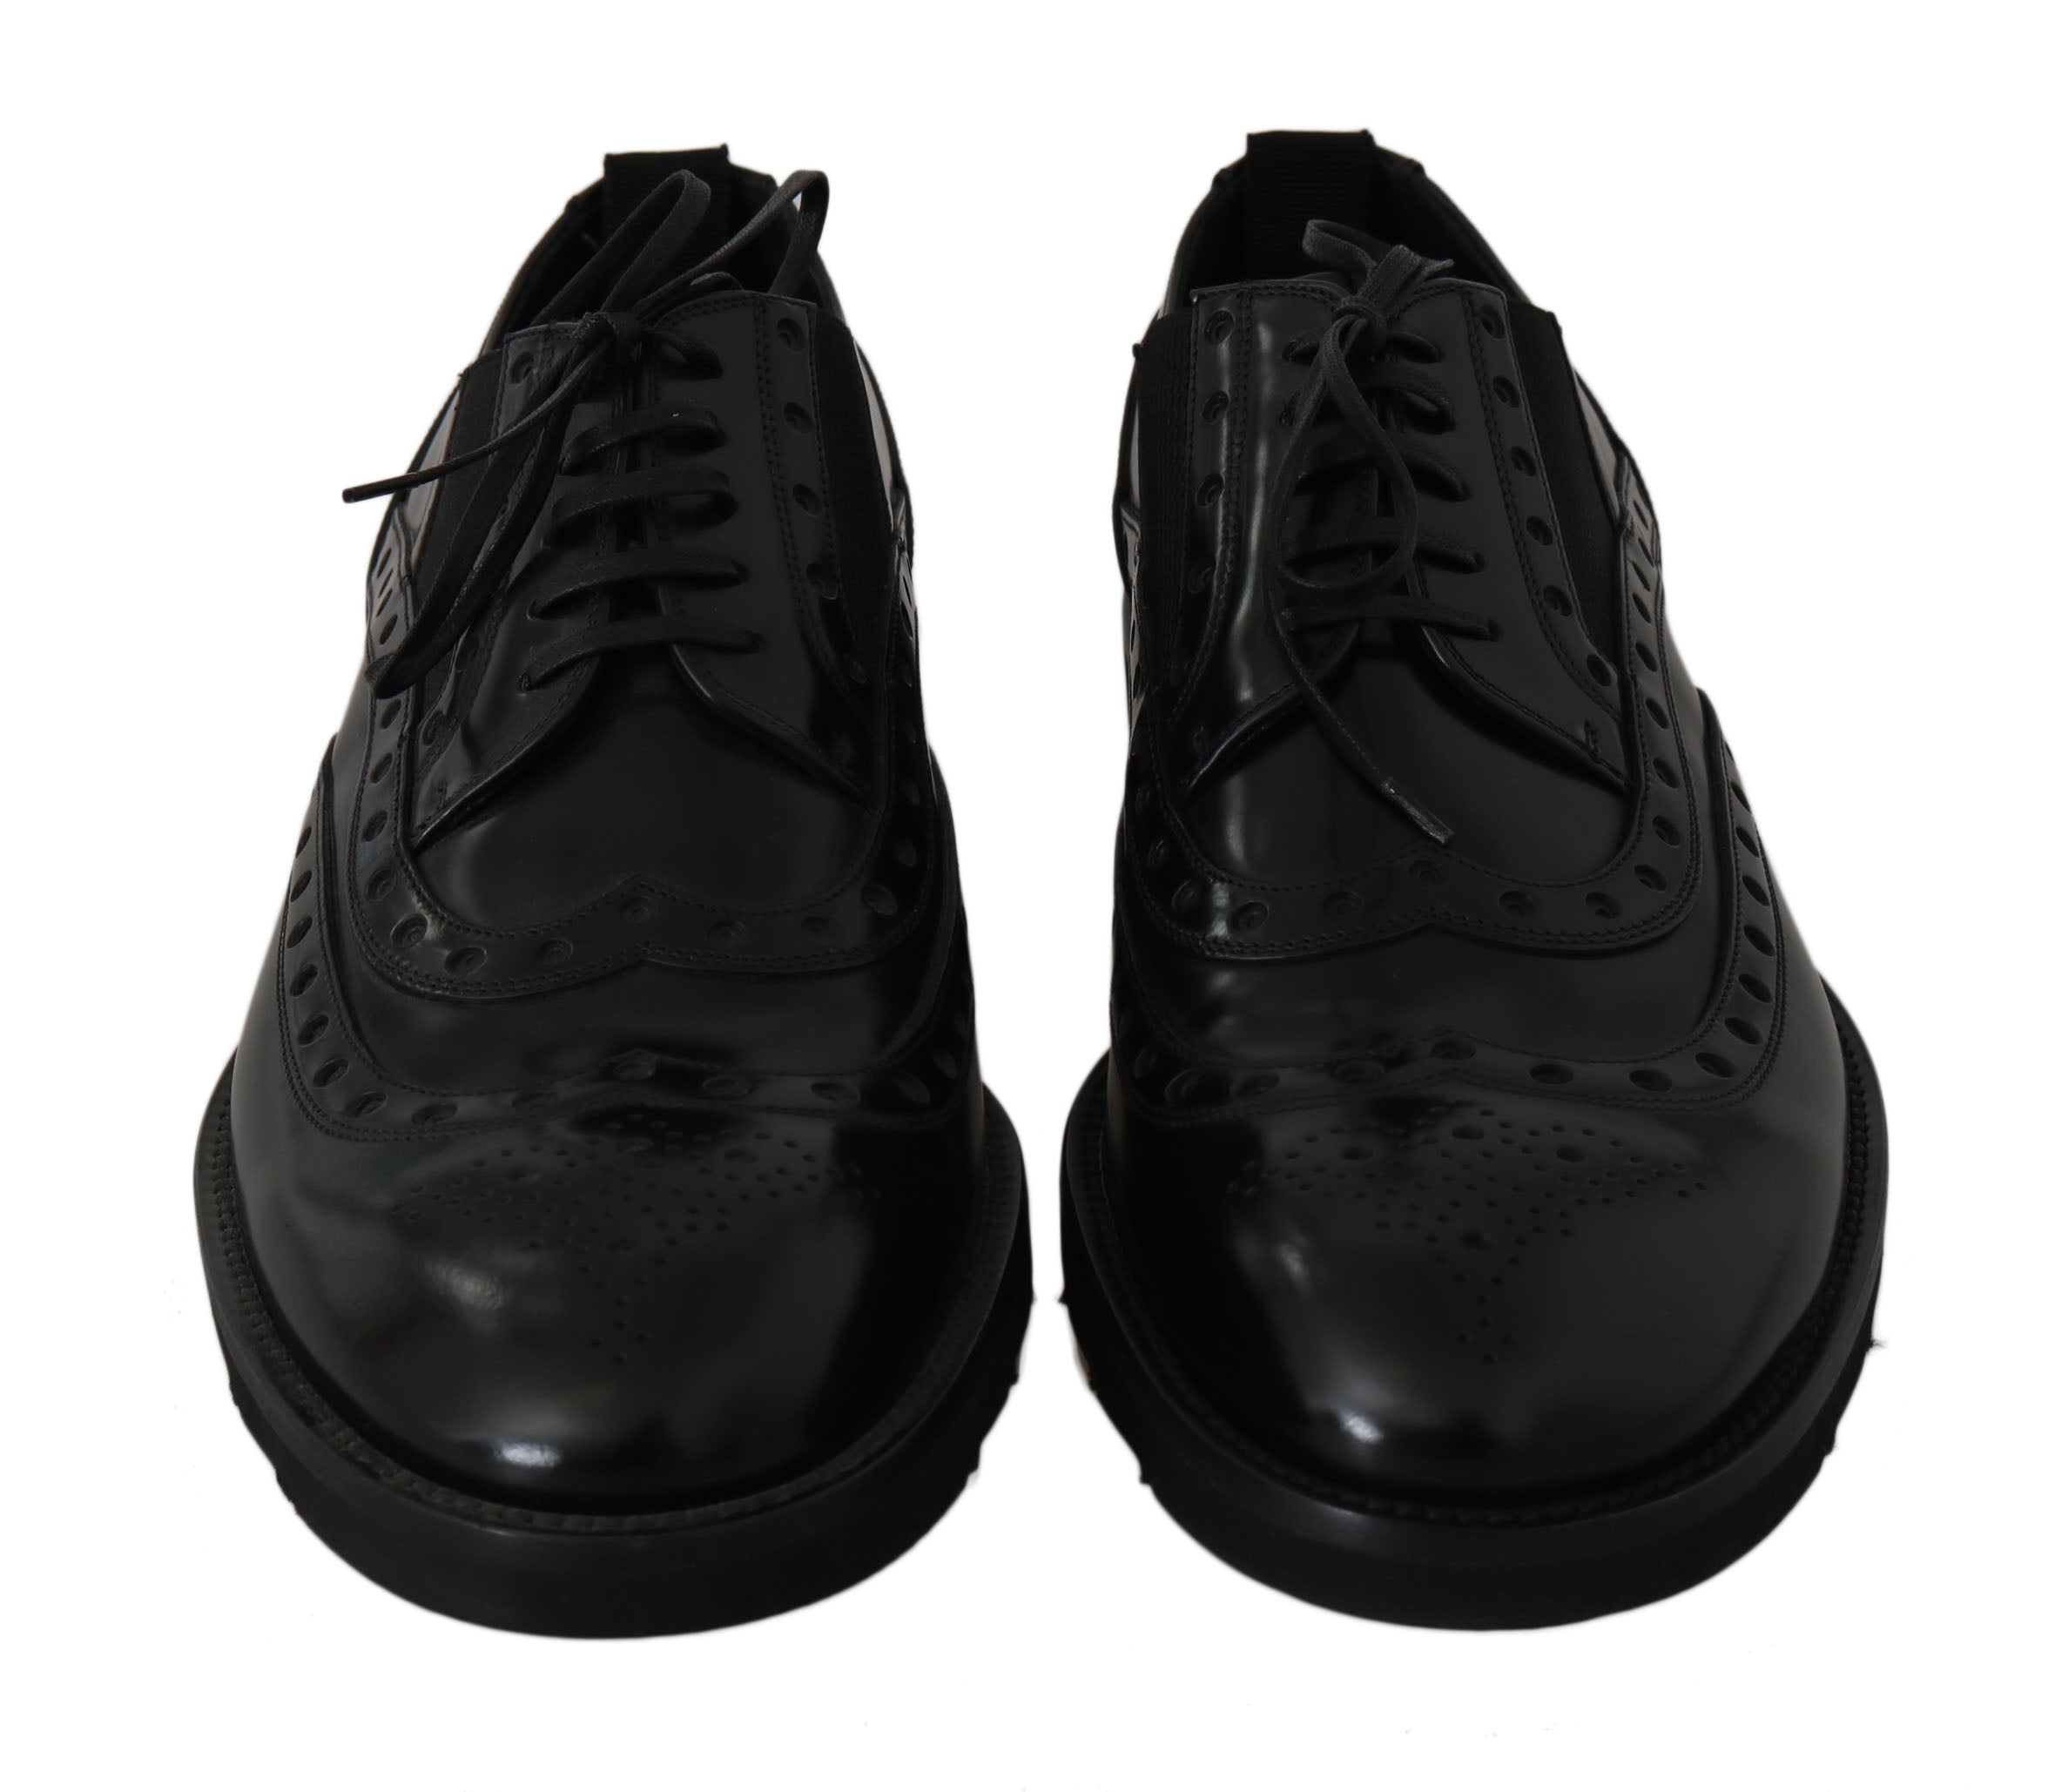 Black Leather Dress Derby Wingtip Shoes